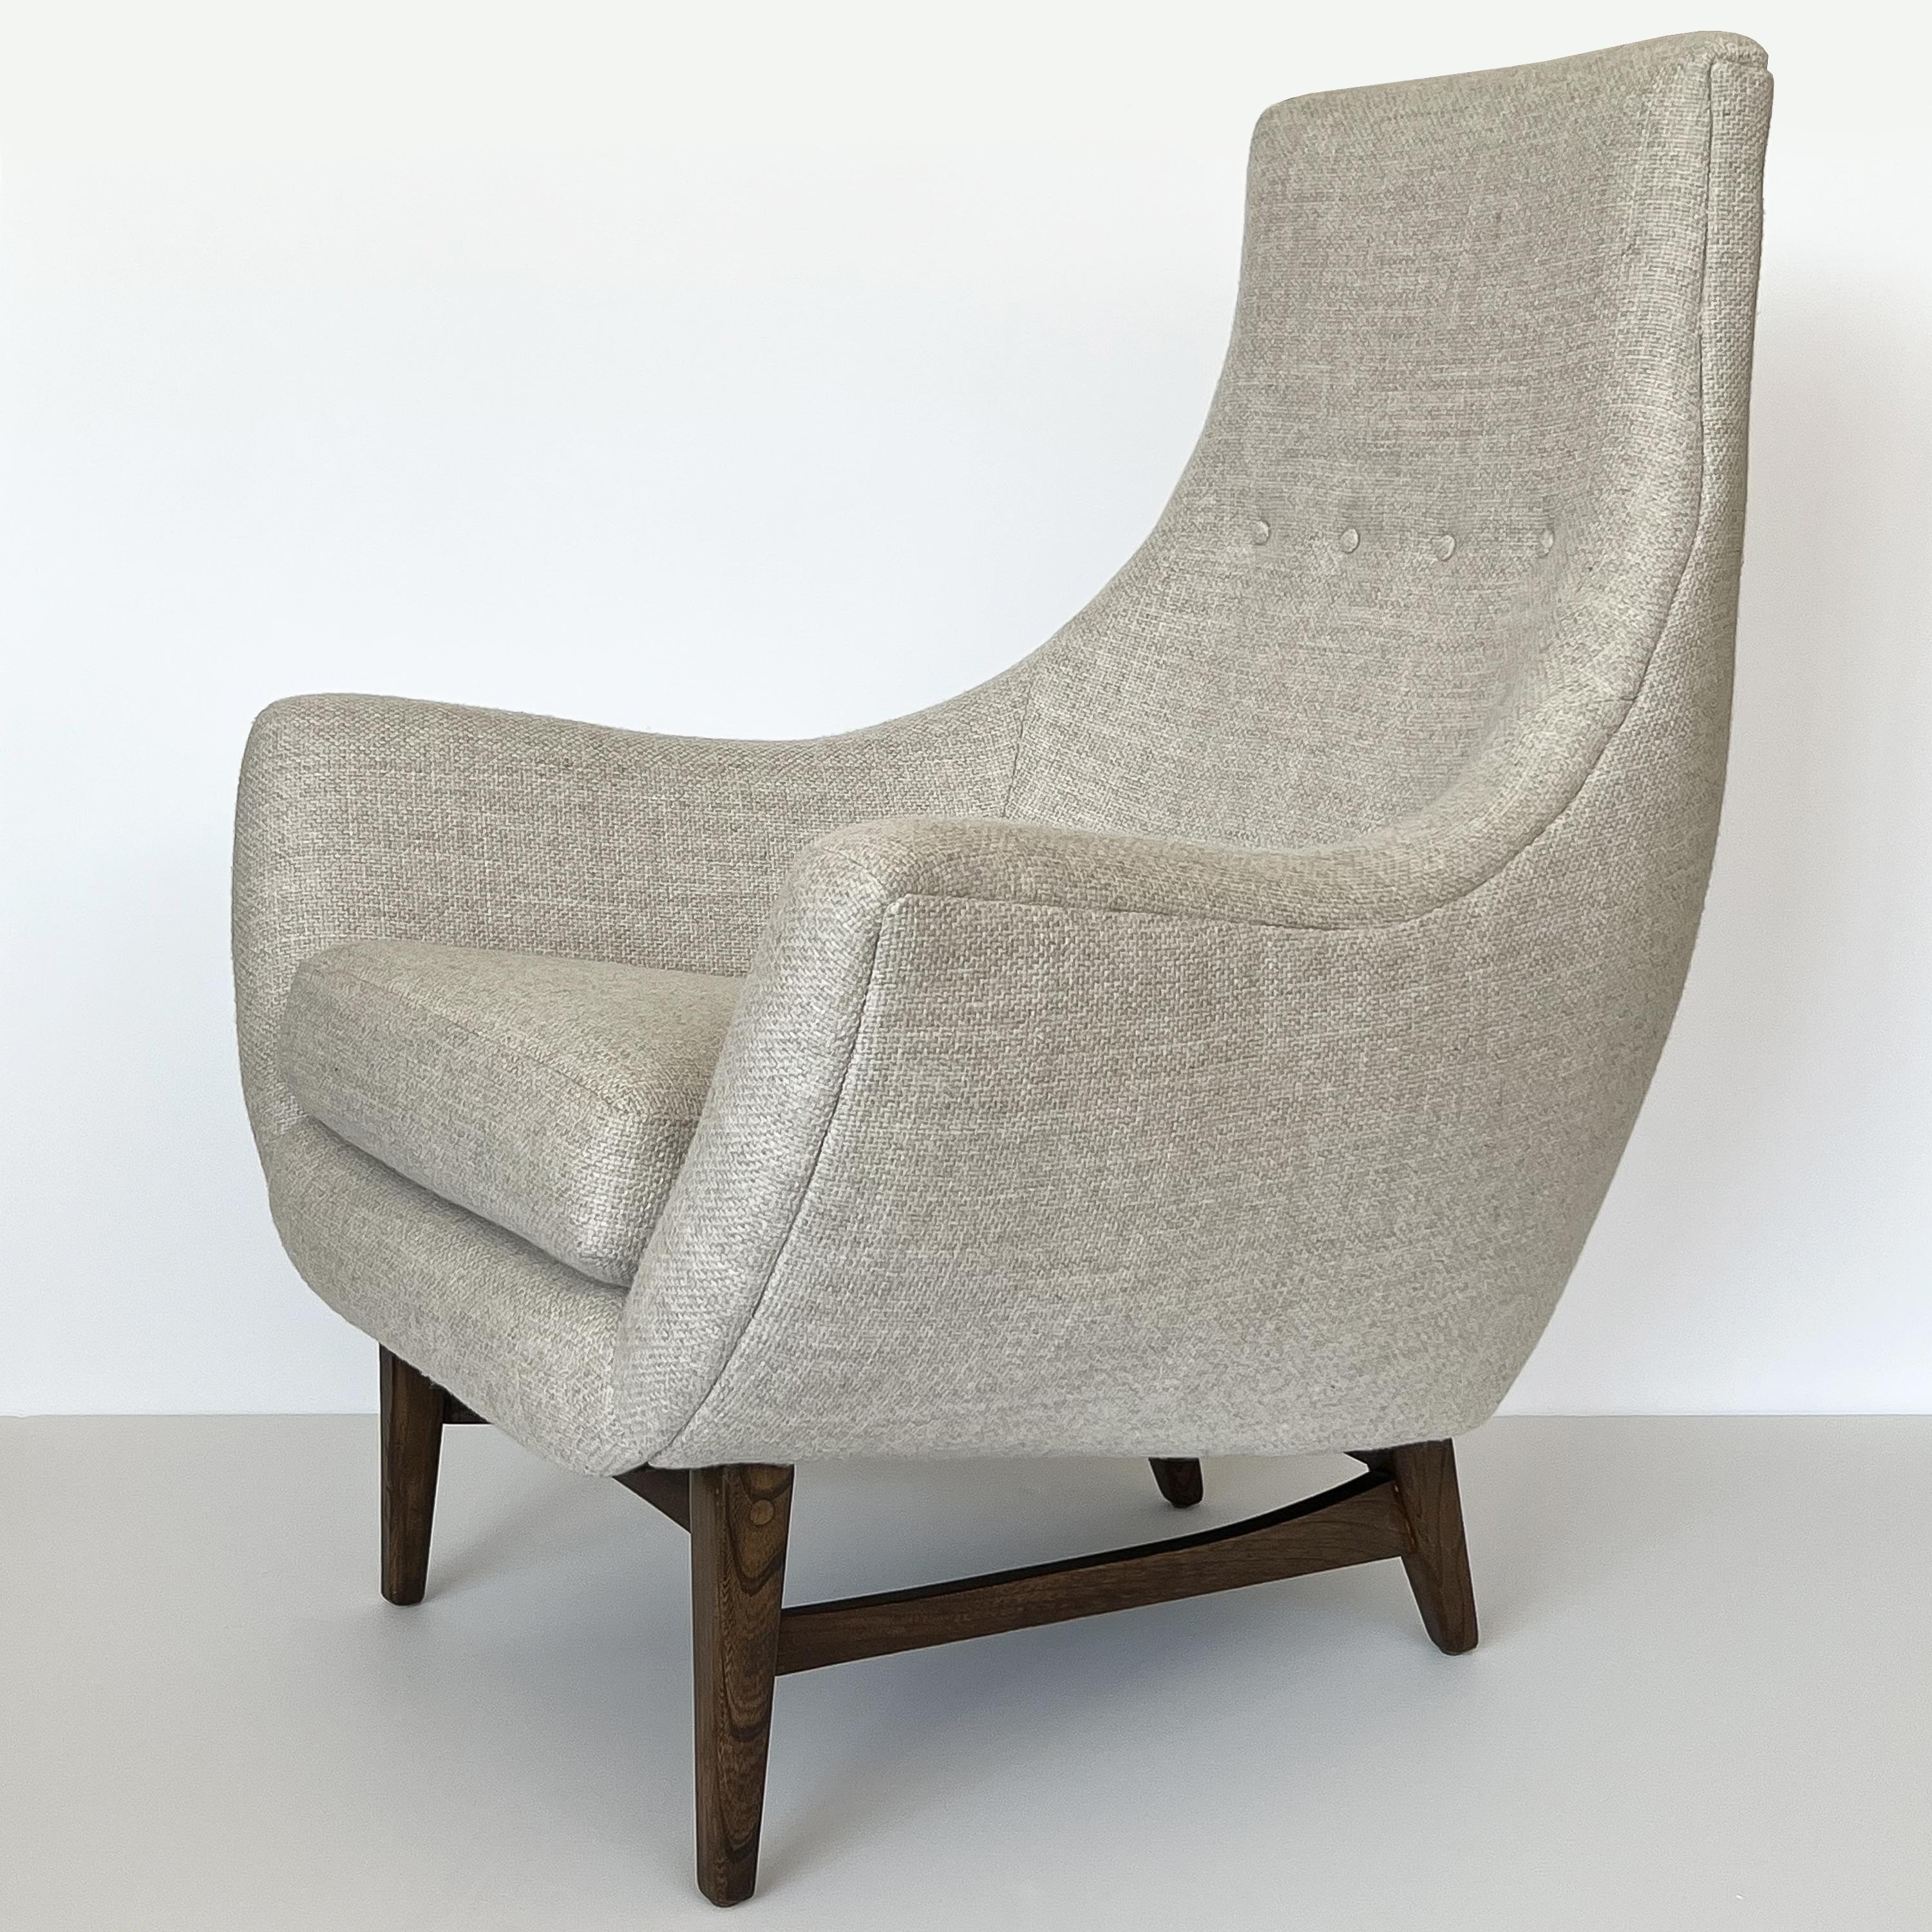 Fabric Adrian Pearsall High Back Sculptural Lounge Chair